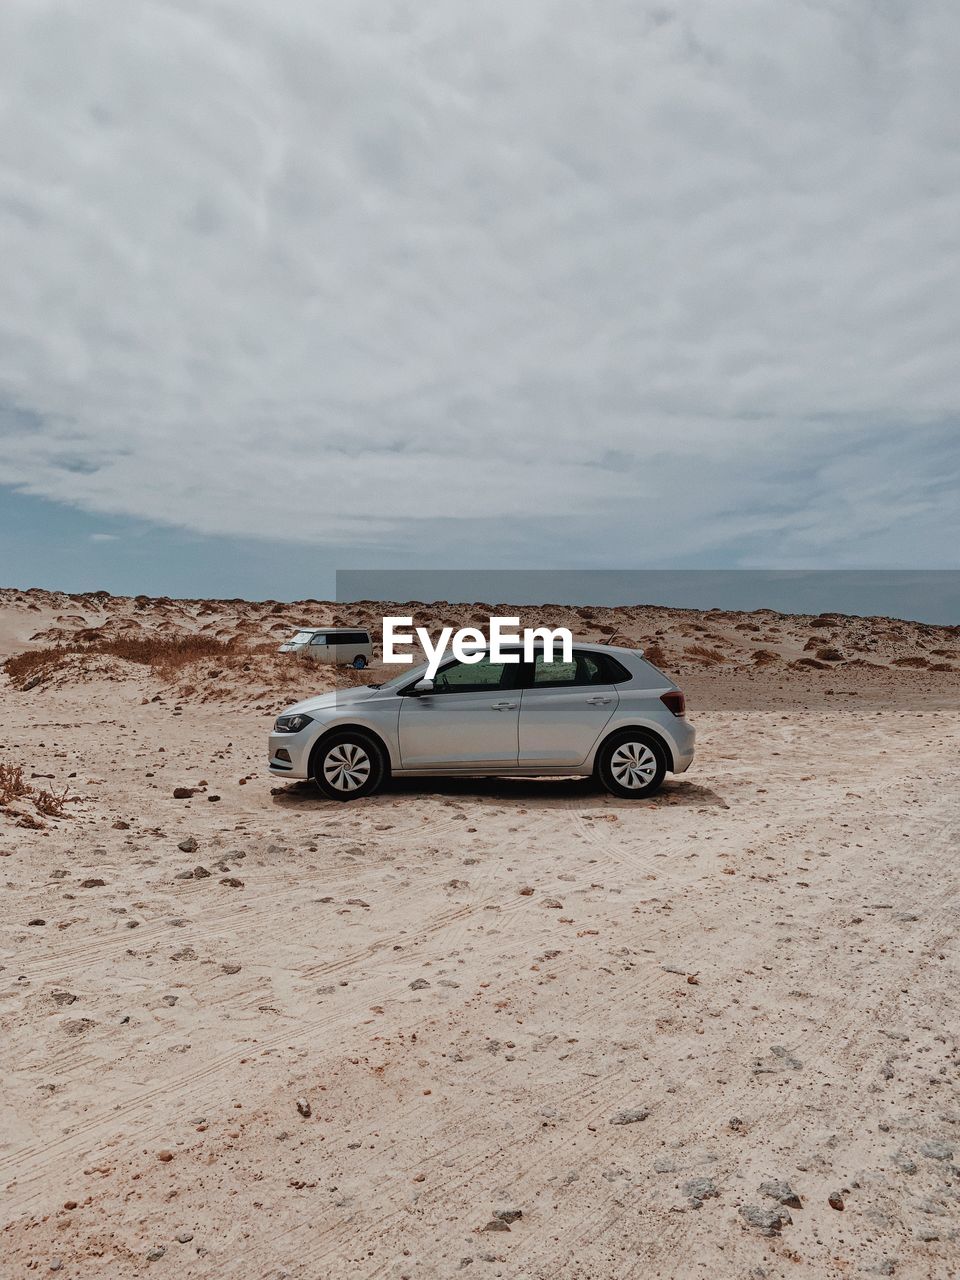 VINTAGE CAR ON DESERT